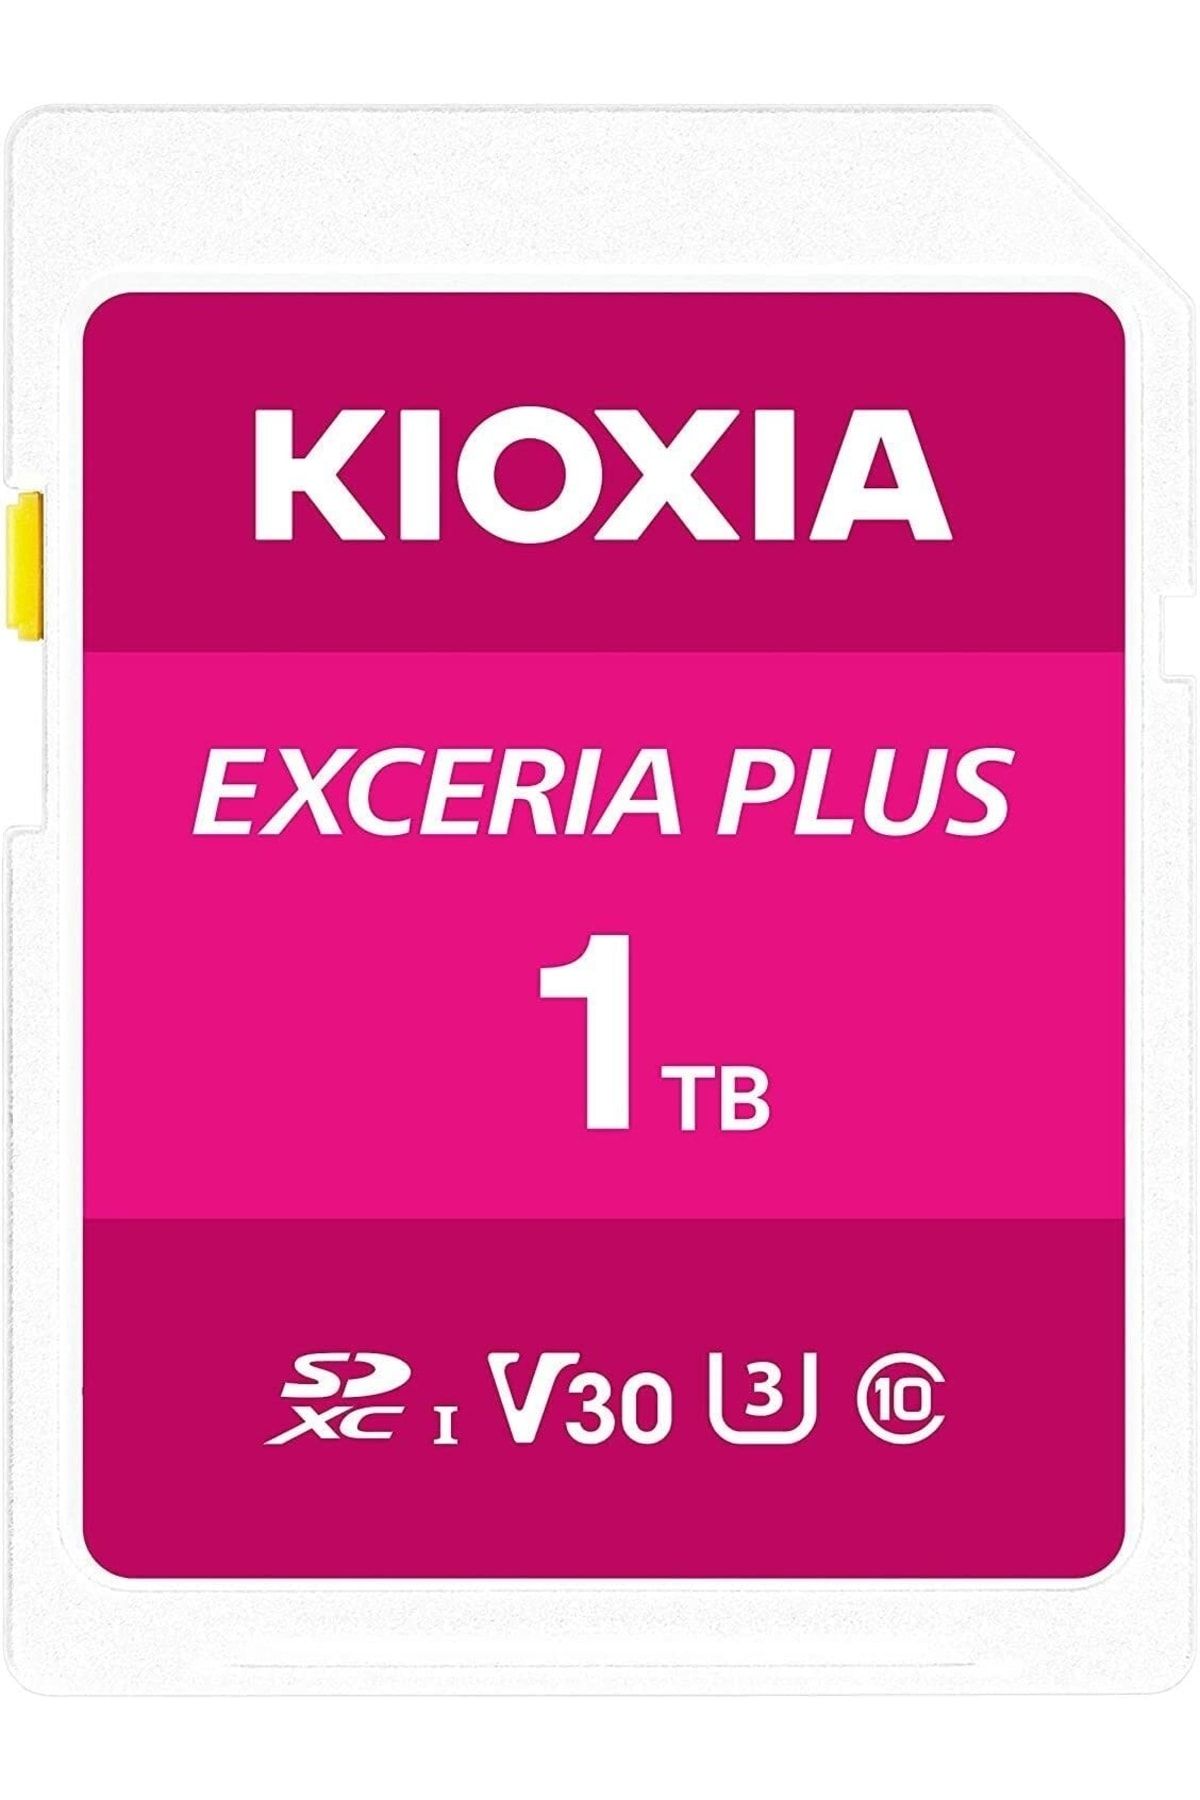 Kioxia Exceria Plus Sd Card 1tb U3 V30